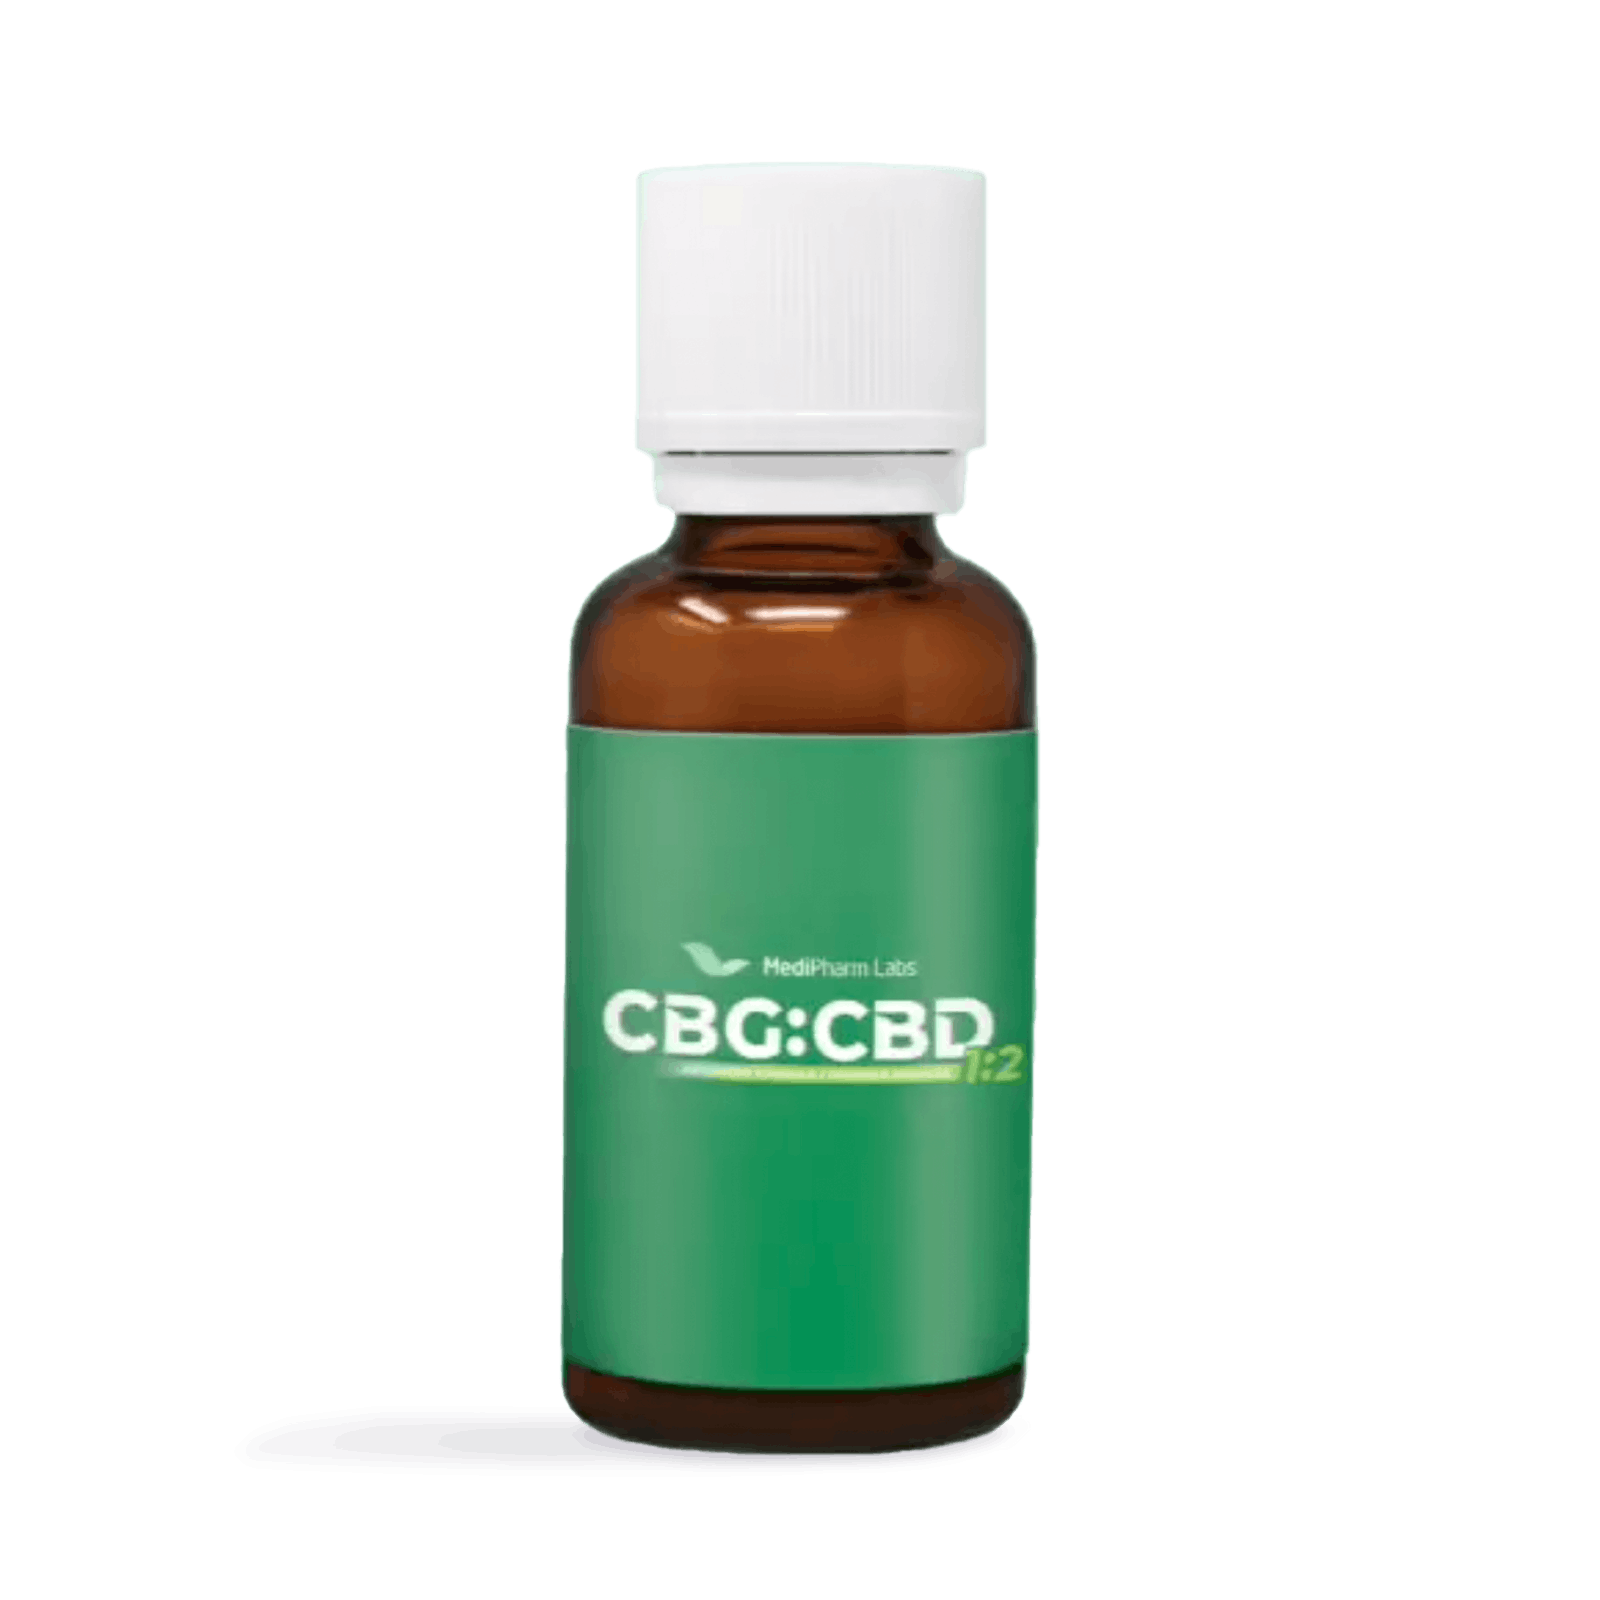 CBG:CBD 1:2 Advanced Formula Oil | 30ml | Mail Order Marijuana